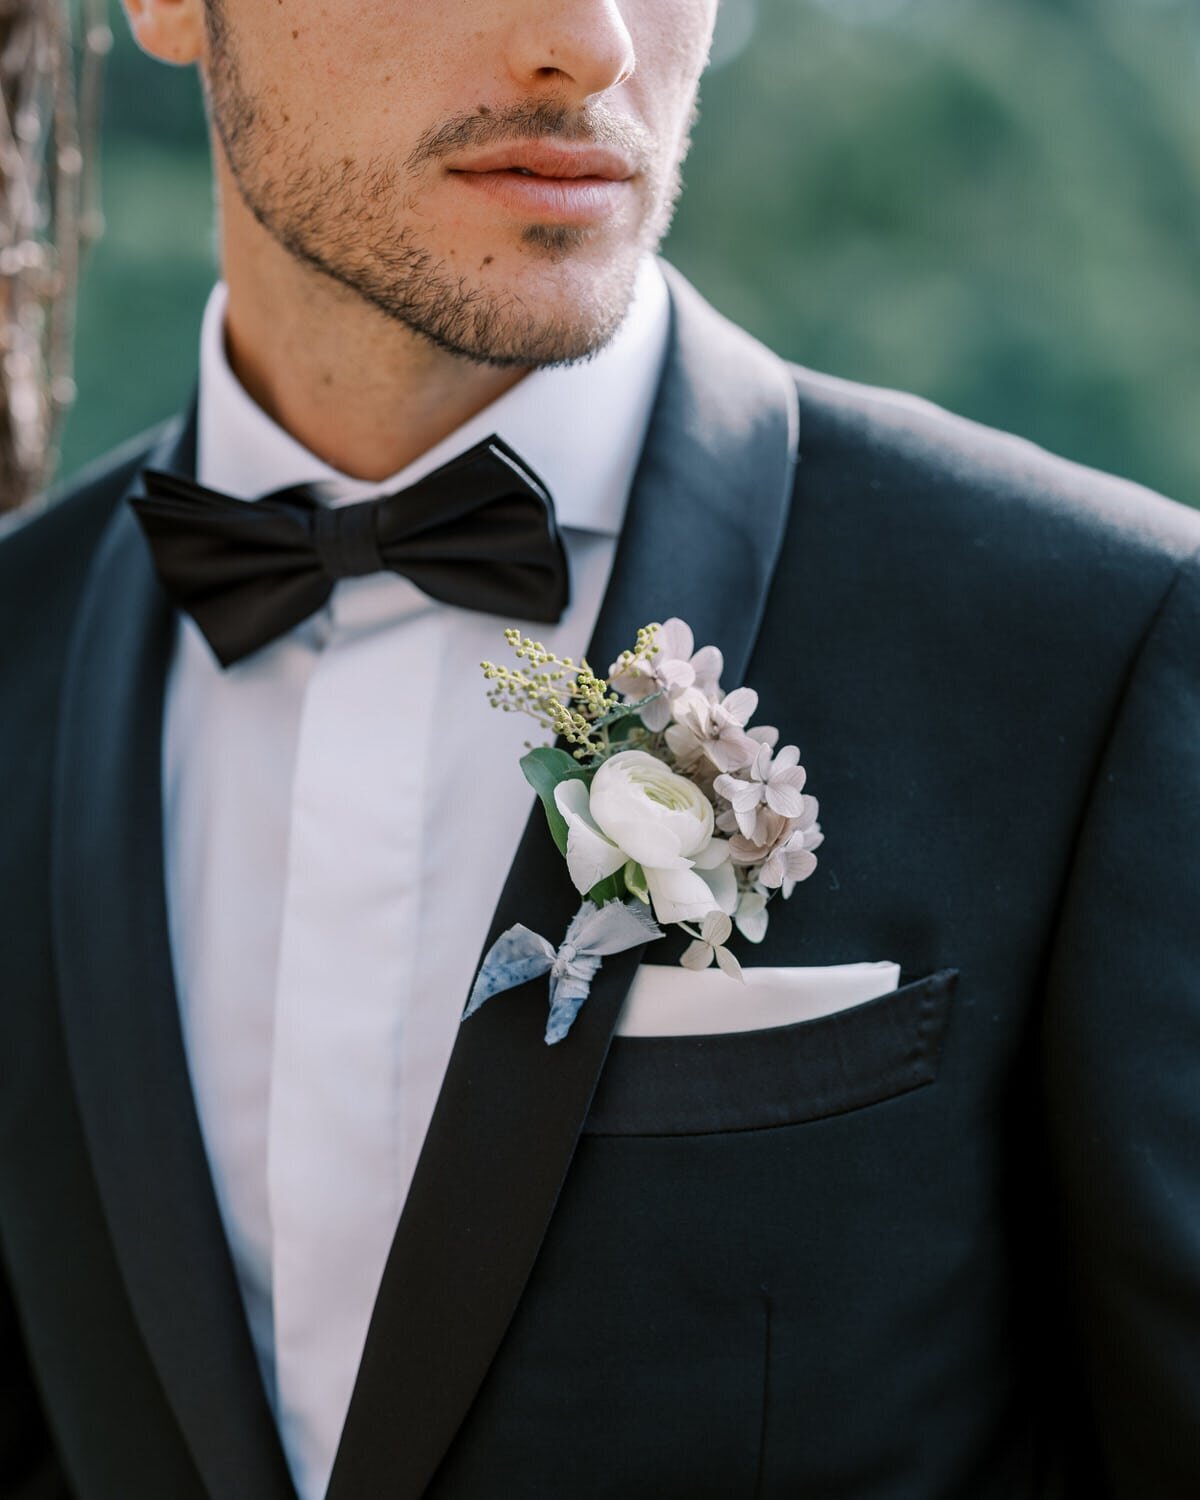 Serenity-photography-groom-attire-YSG-tailors-14